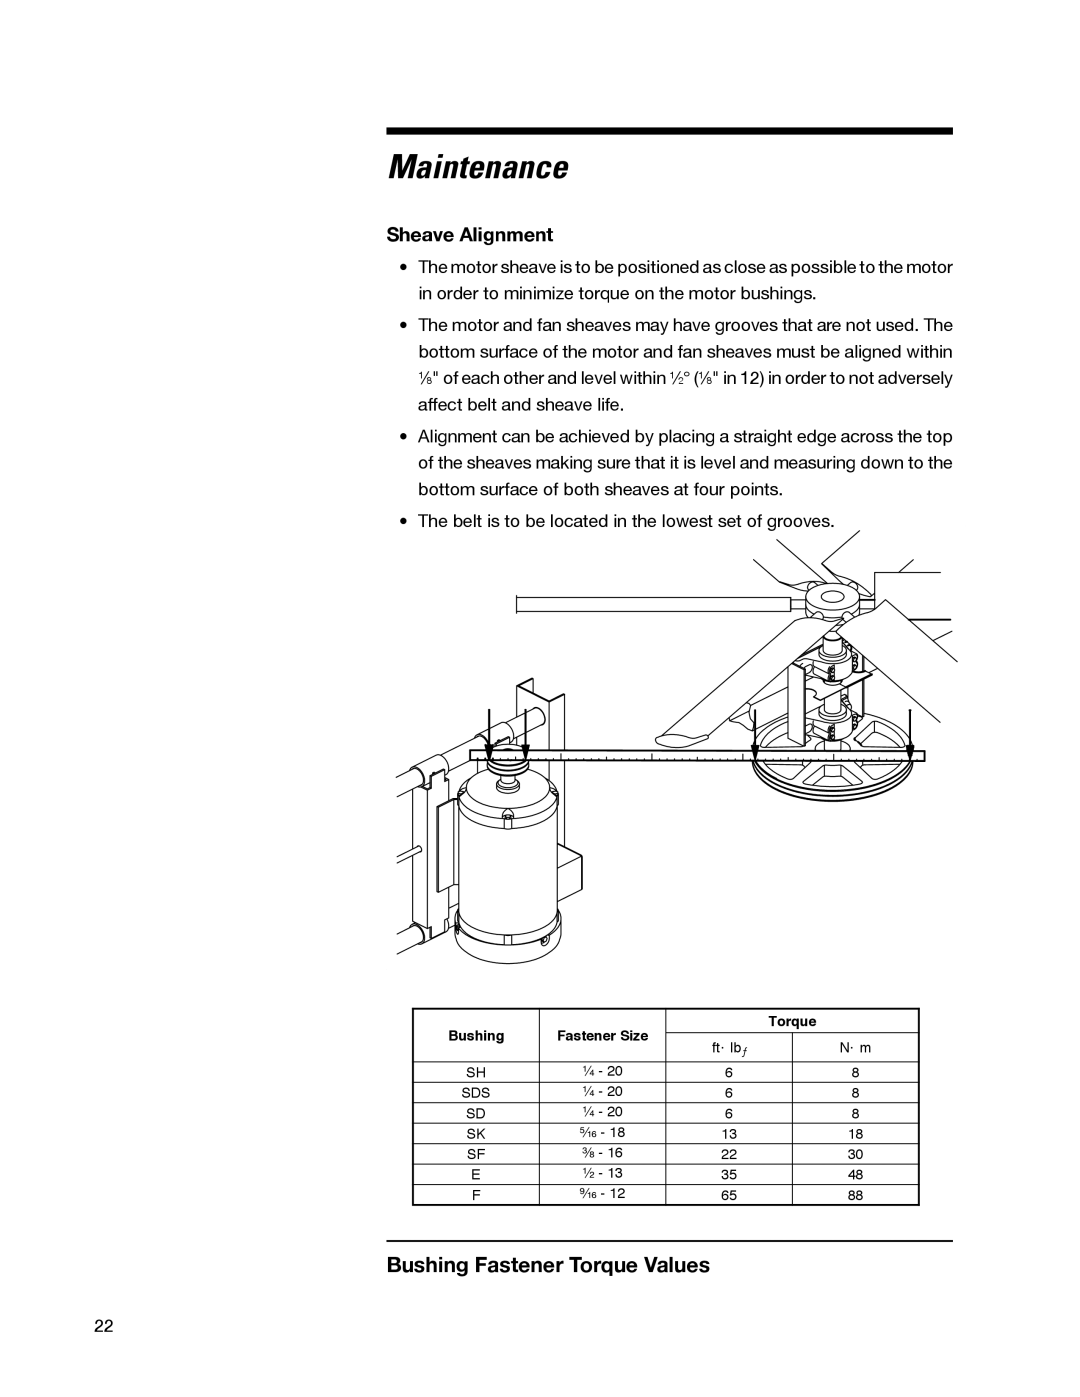 SPX Cooling Technologies 98-1514E user manual Bushing Fastener Torque Values, Sheave Alignment, Maintenance 